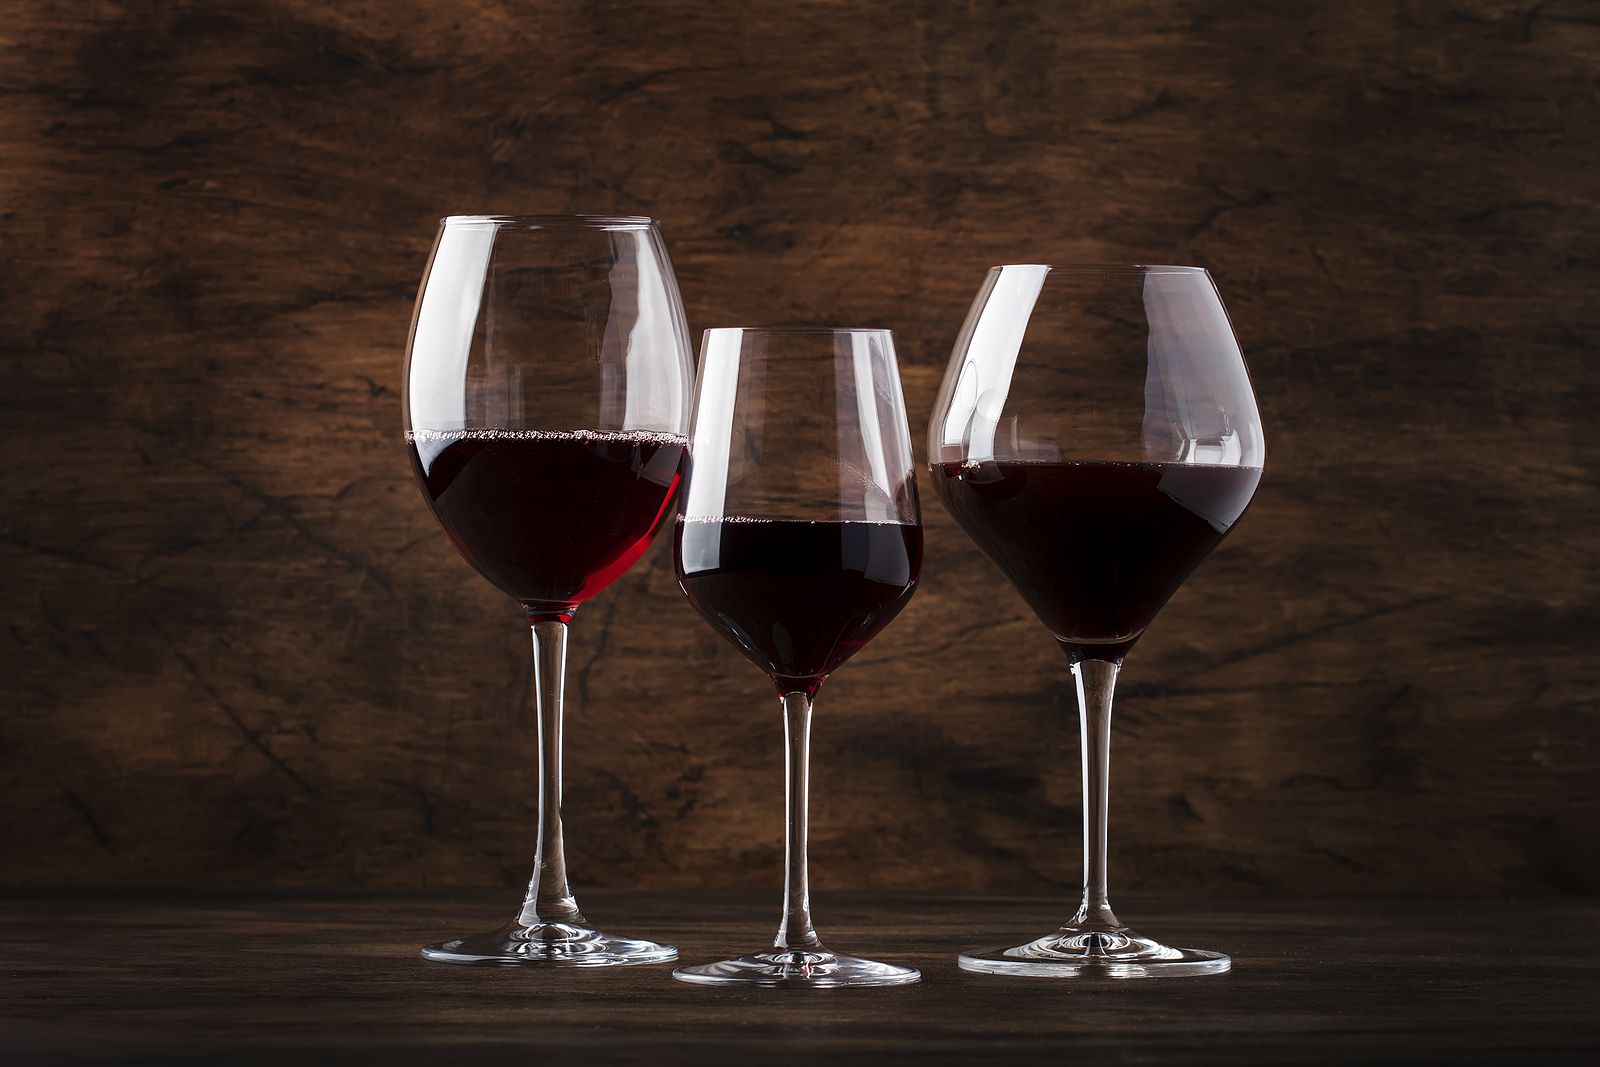 4 vinos tintos (no baratos) para degustar en buena compañía